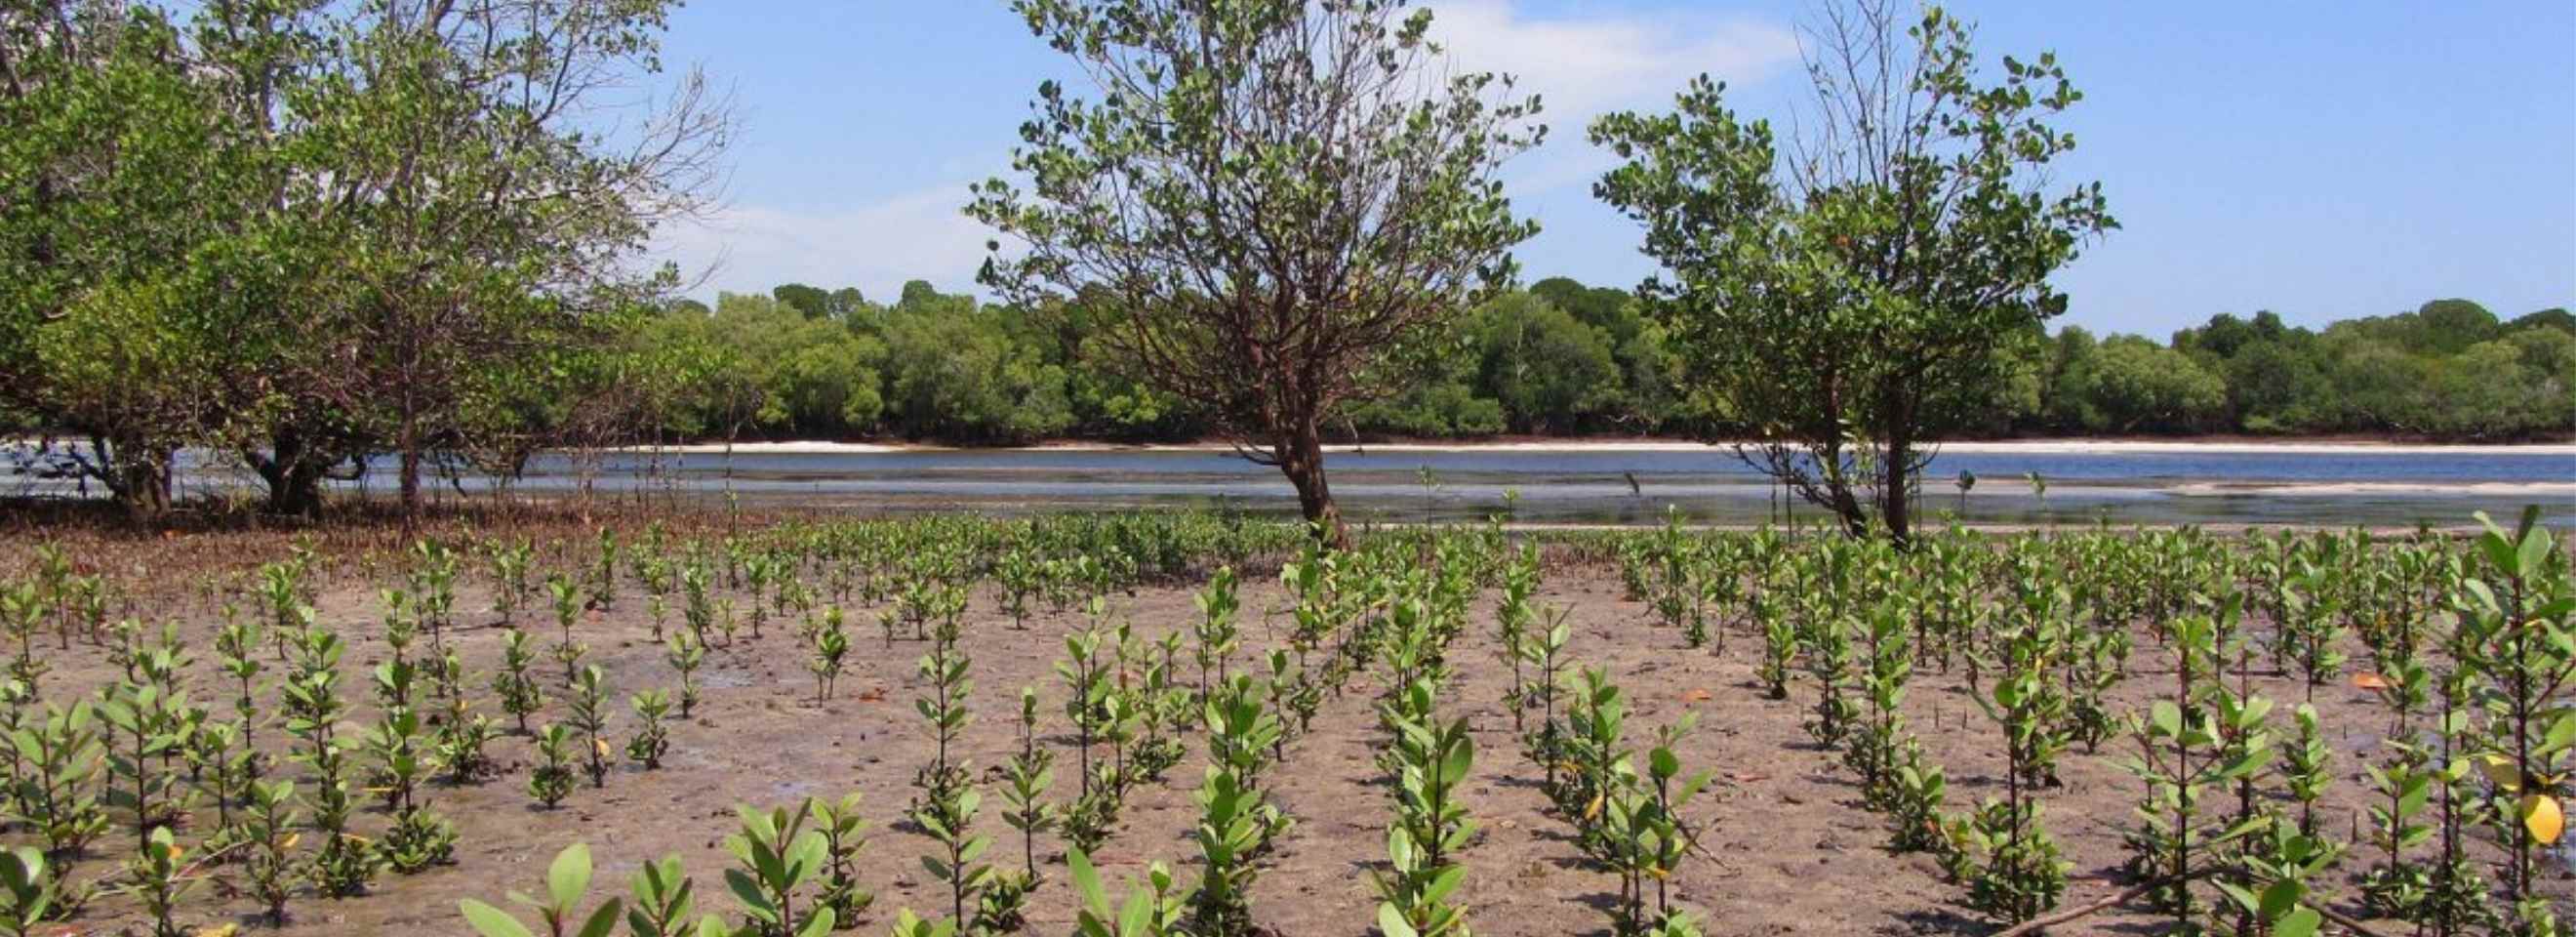 Restoring Mangroves